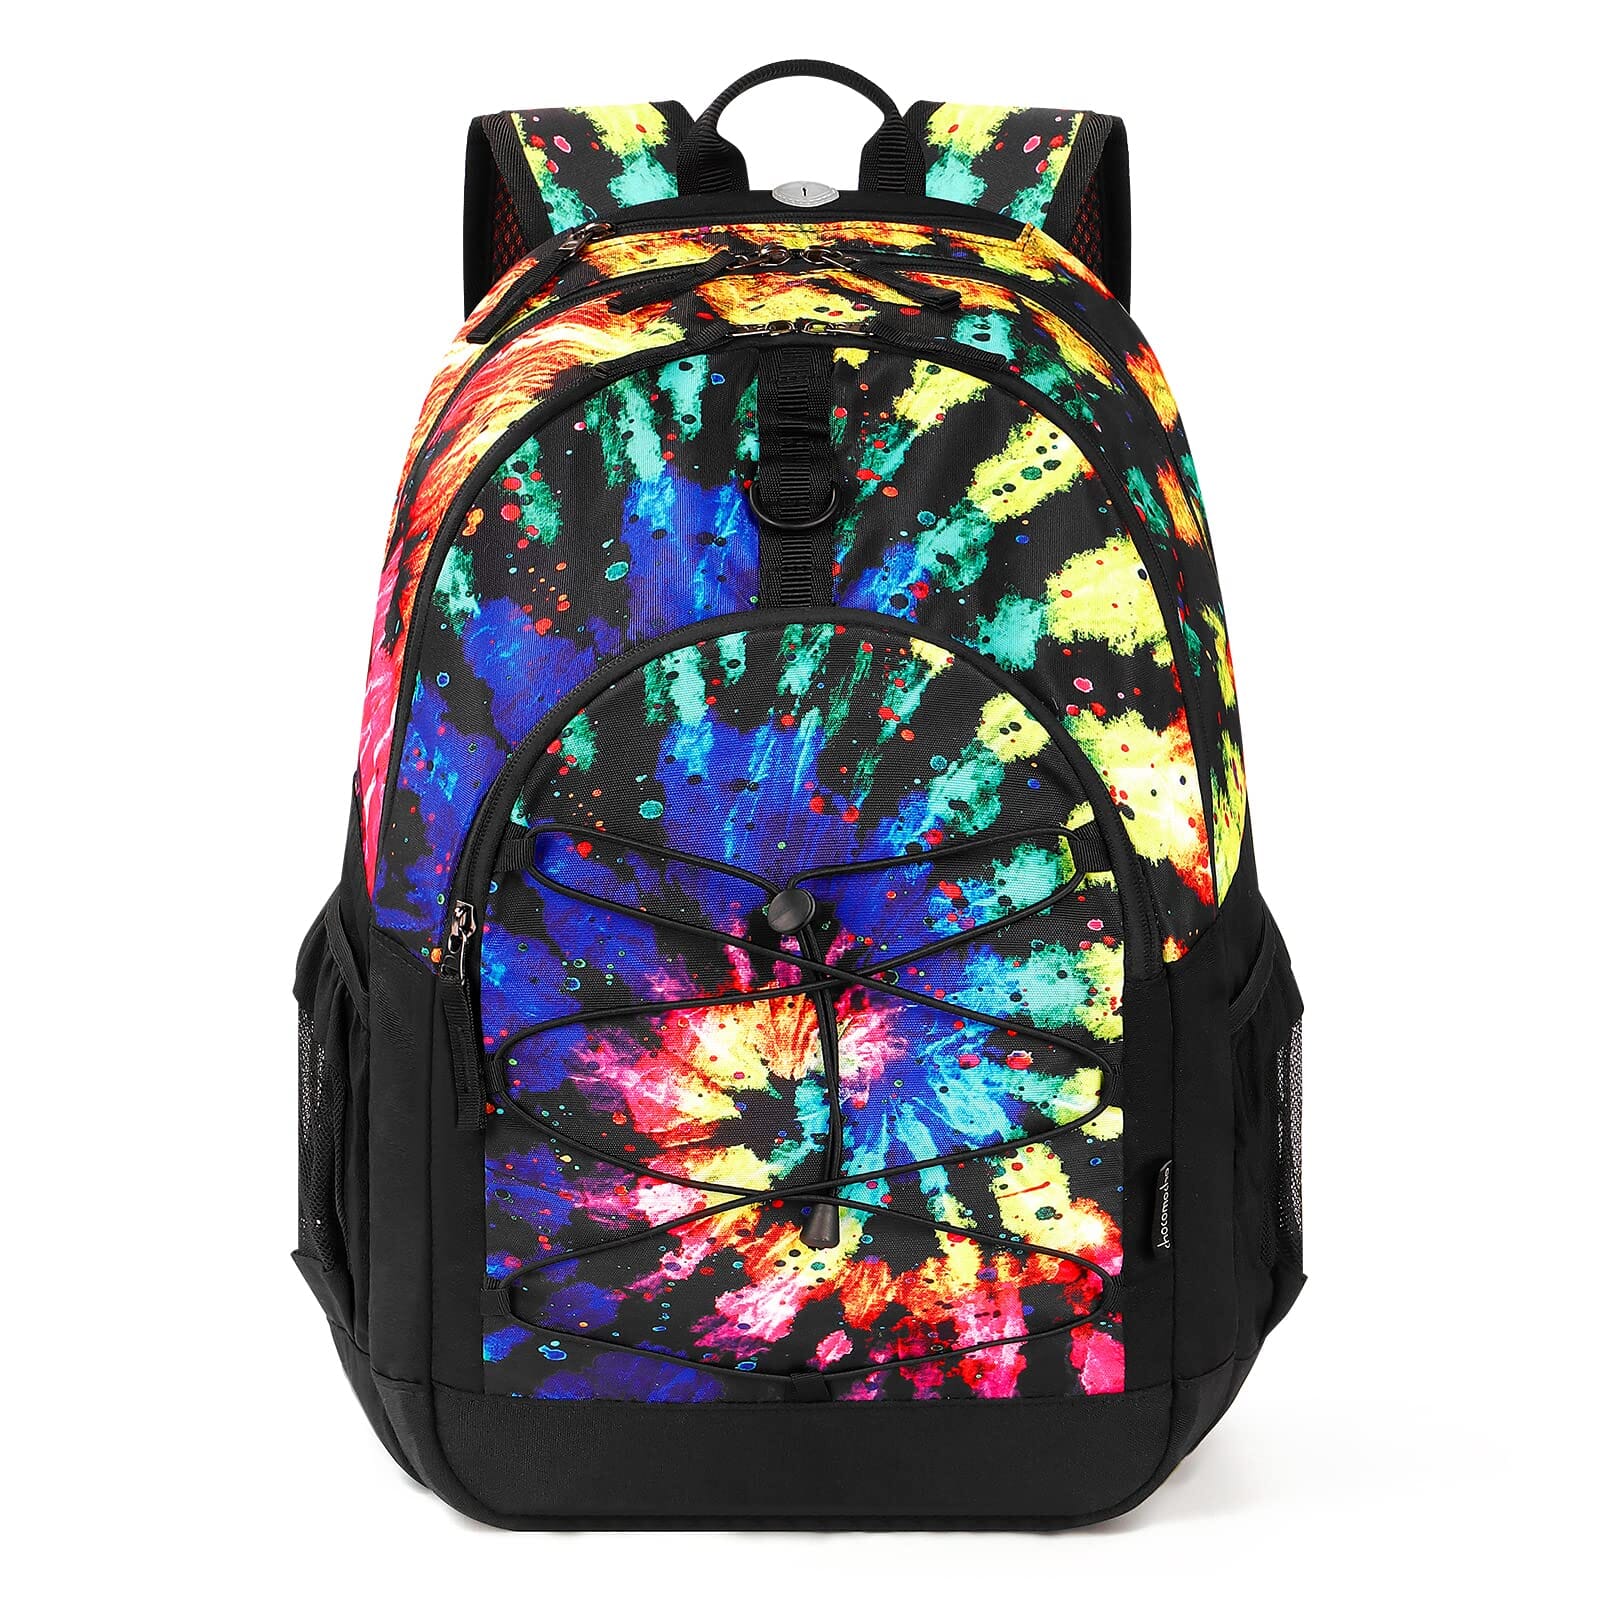 Choco Mocha Tie Dye Backpack for Teen Girls, Travel School Backpack for Kids Middle School Large Bookbag 18 Inch, Black chocomochakids 